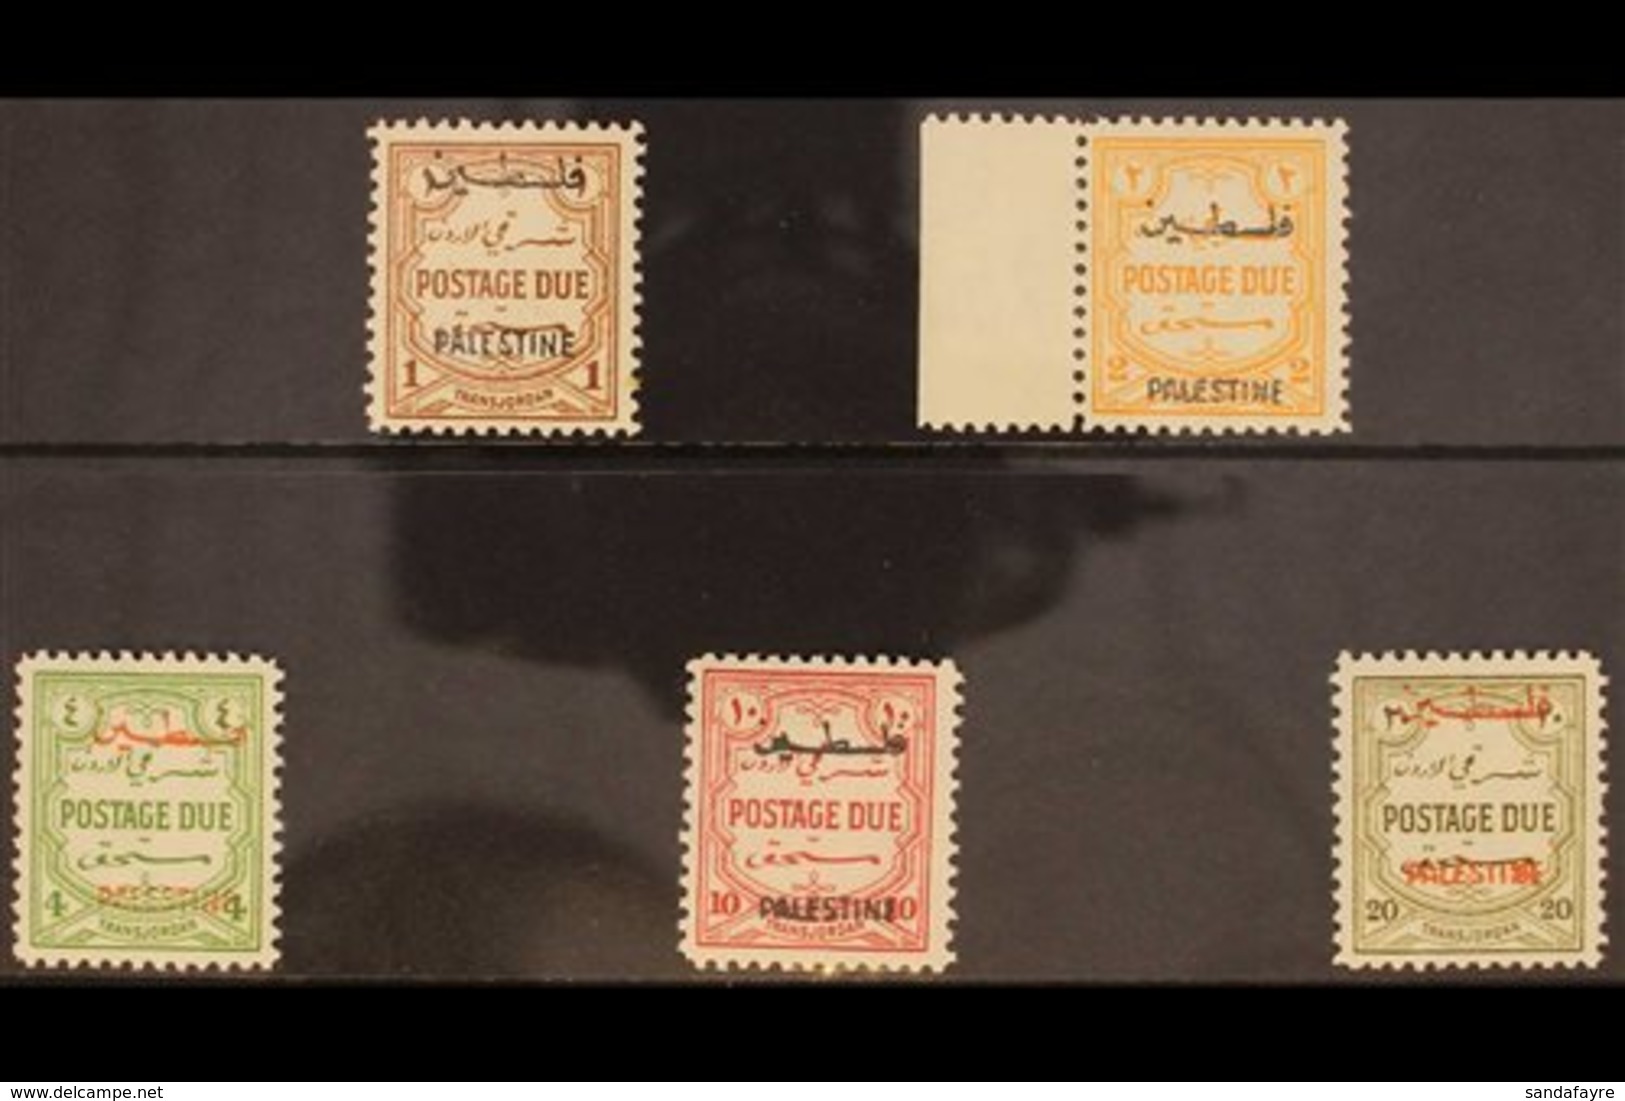 OCCUPATION OF PALESTINE POSTAGE DUE. 1948 Multi Script Wmk - Perf 12 Set, SG PD 25/29, Fine Mint (5 Stamps) For More Ima - Jordanien